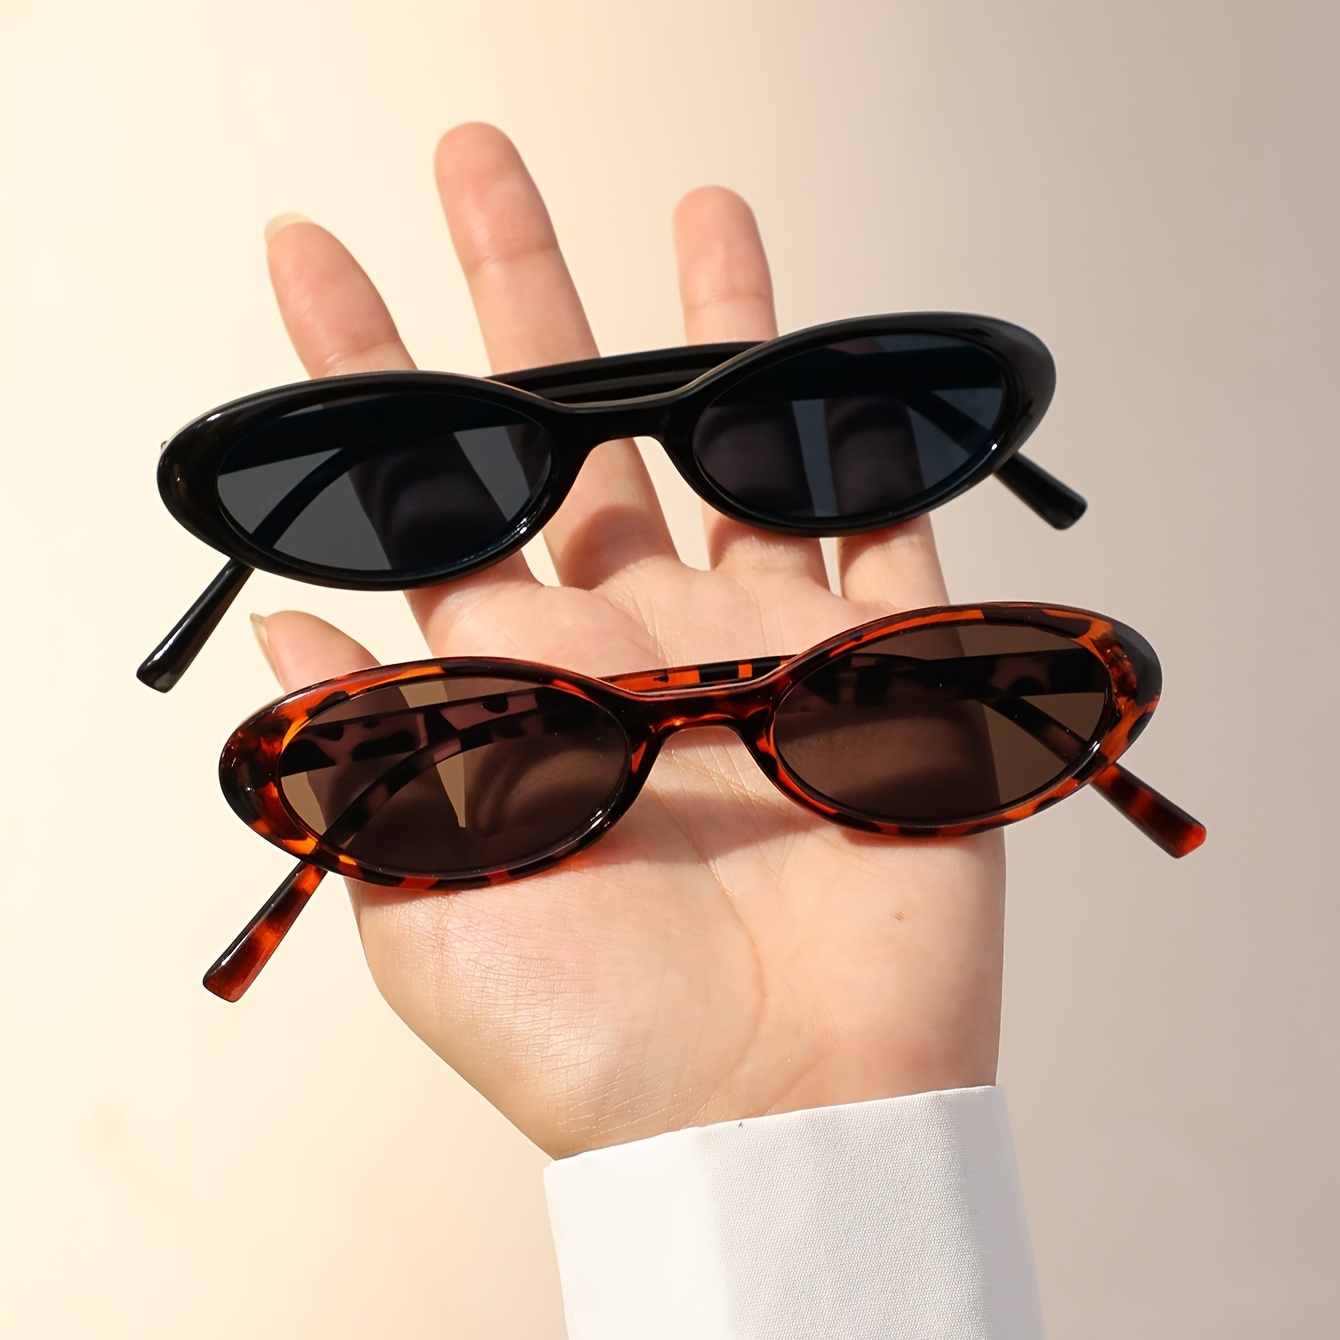 

2pcs Retro Oval For Women Men Small Frame Anti Glare Fashion Sun Shades For Beach Party Club Fashion Glasses